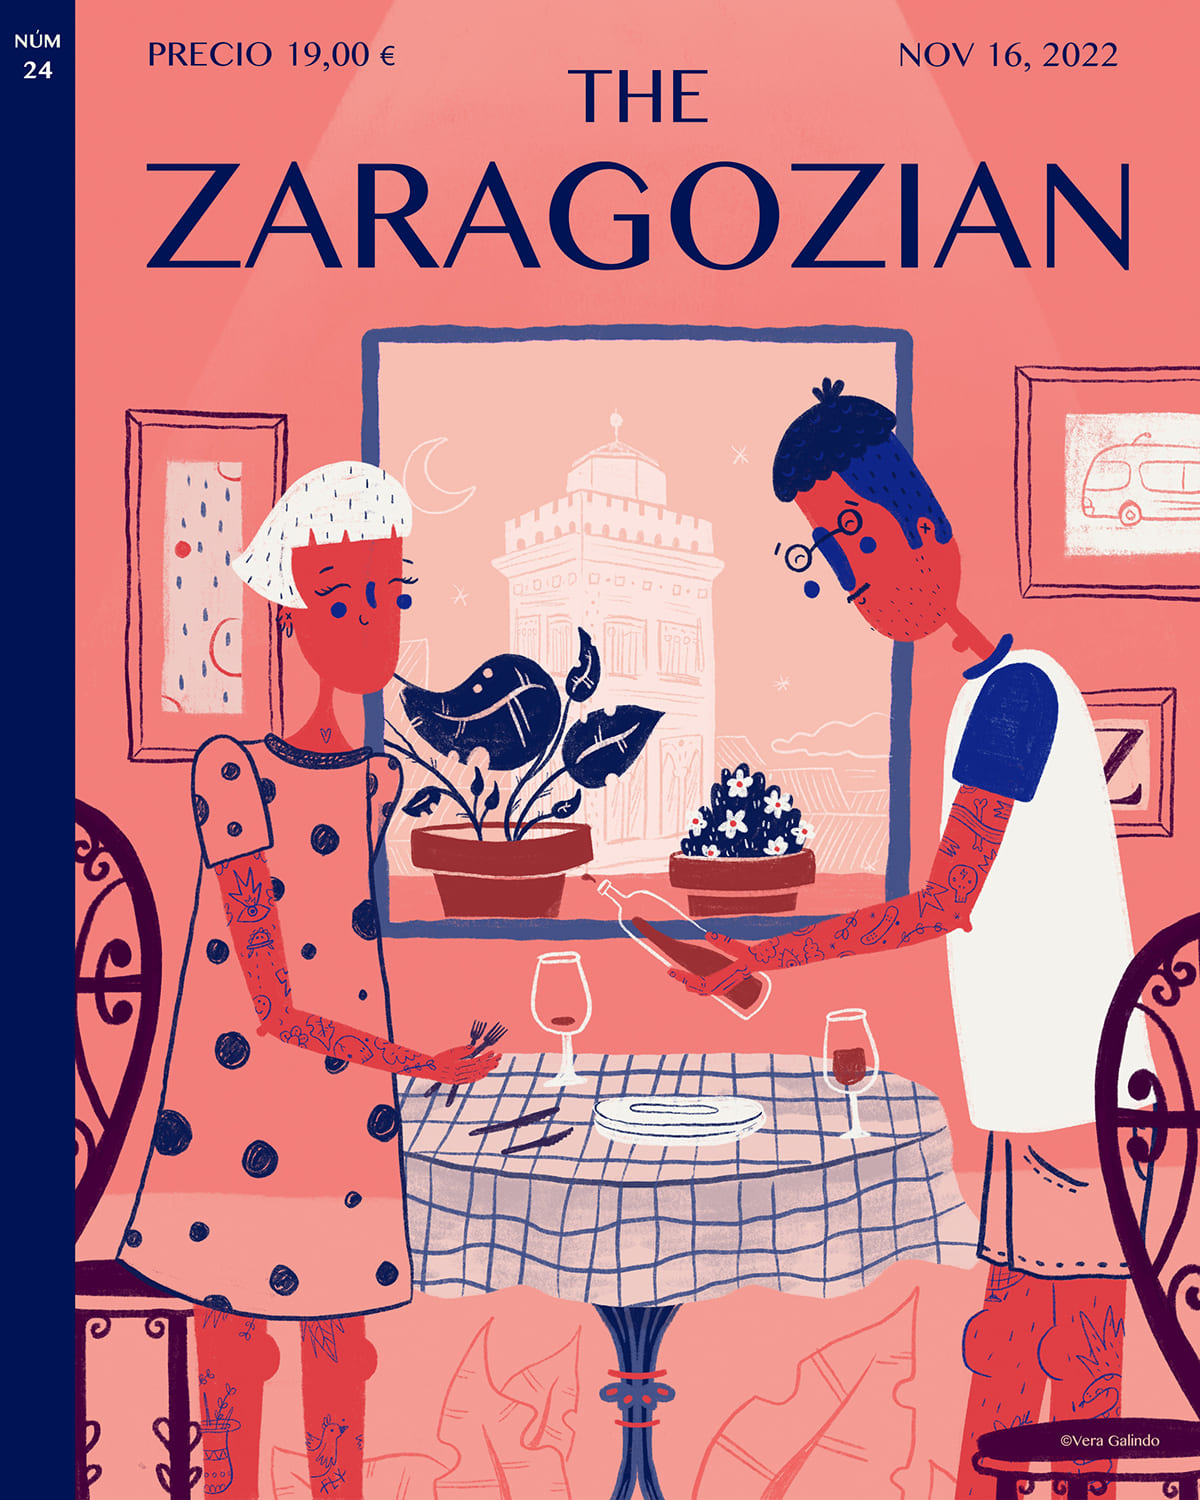 The Zaragozian Illustrated Vera Galindo